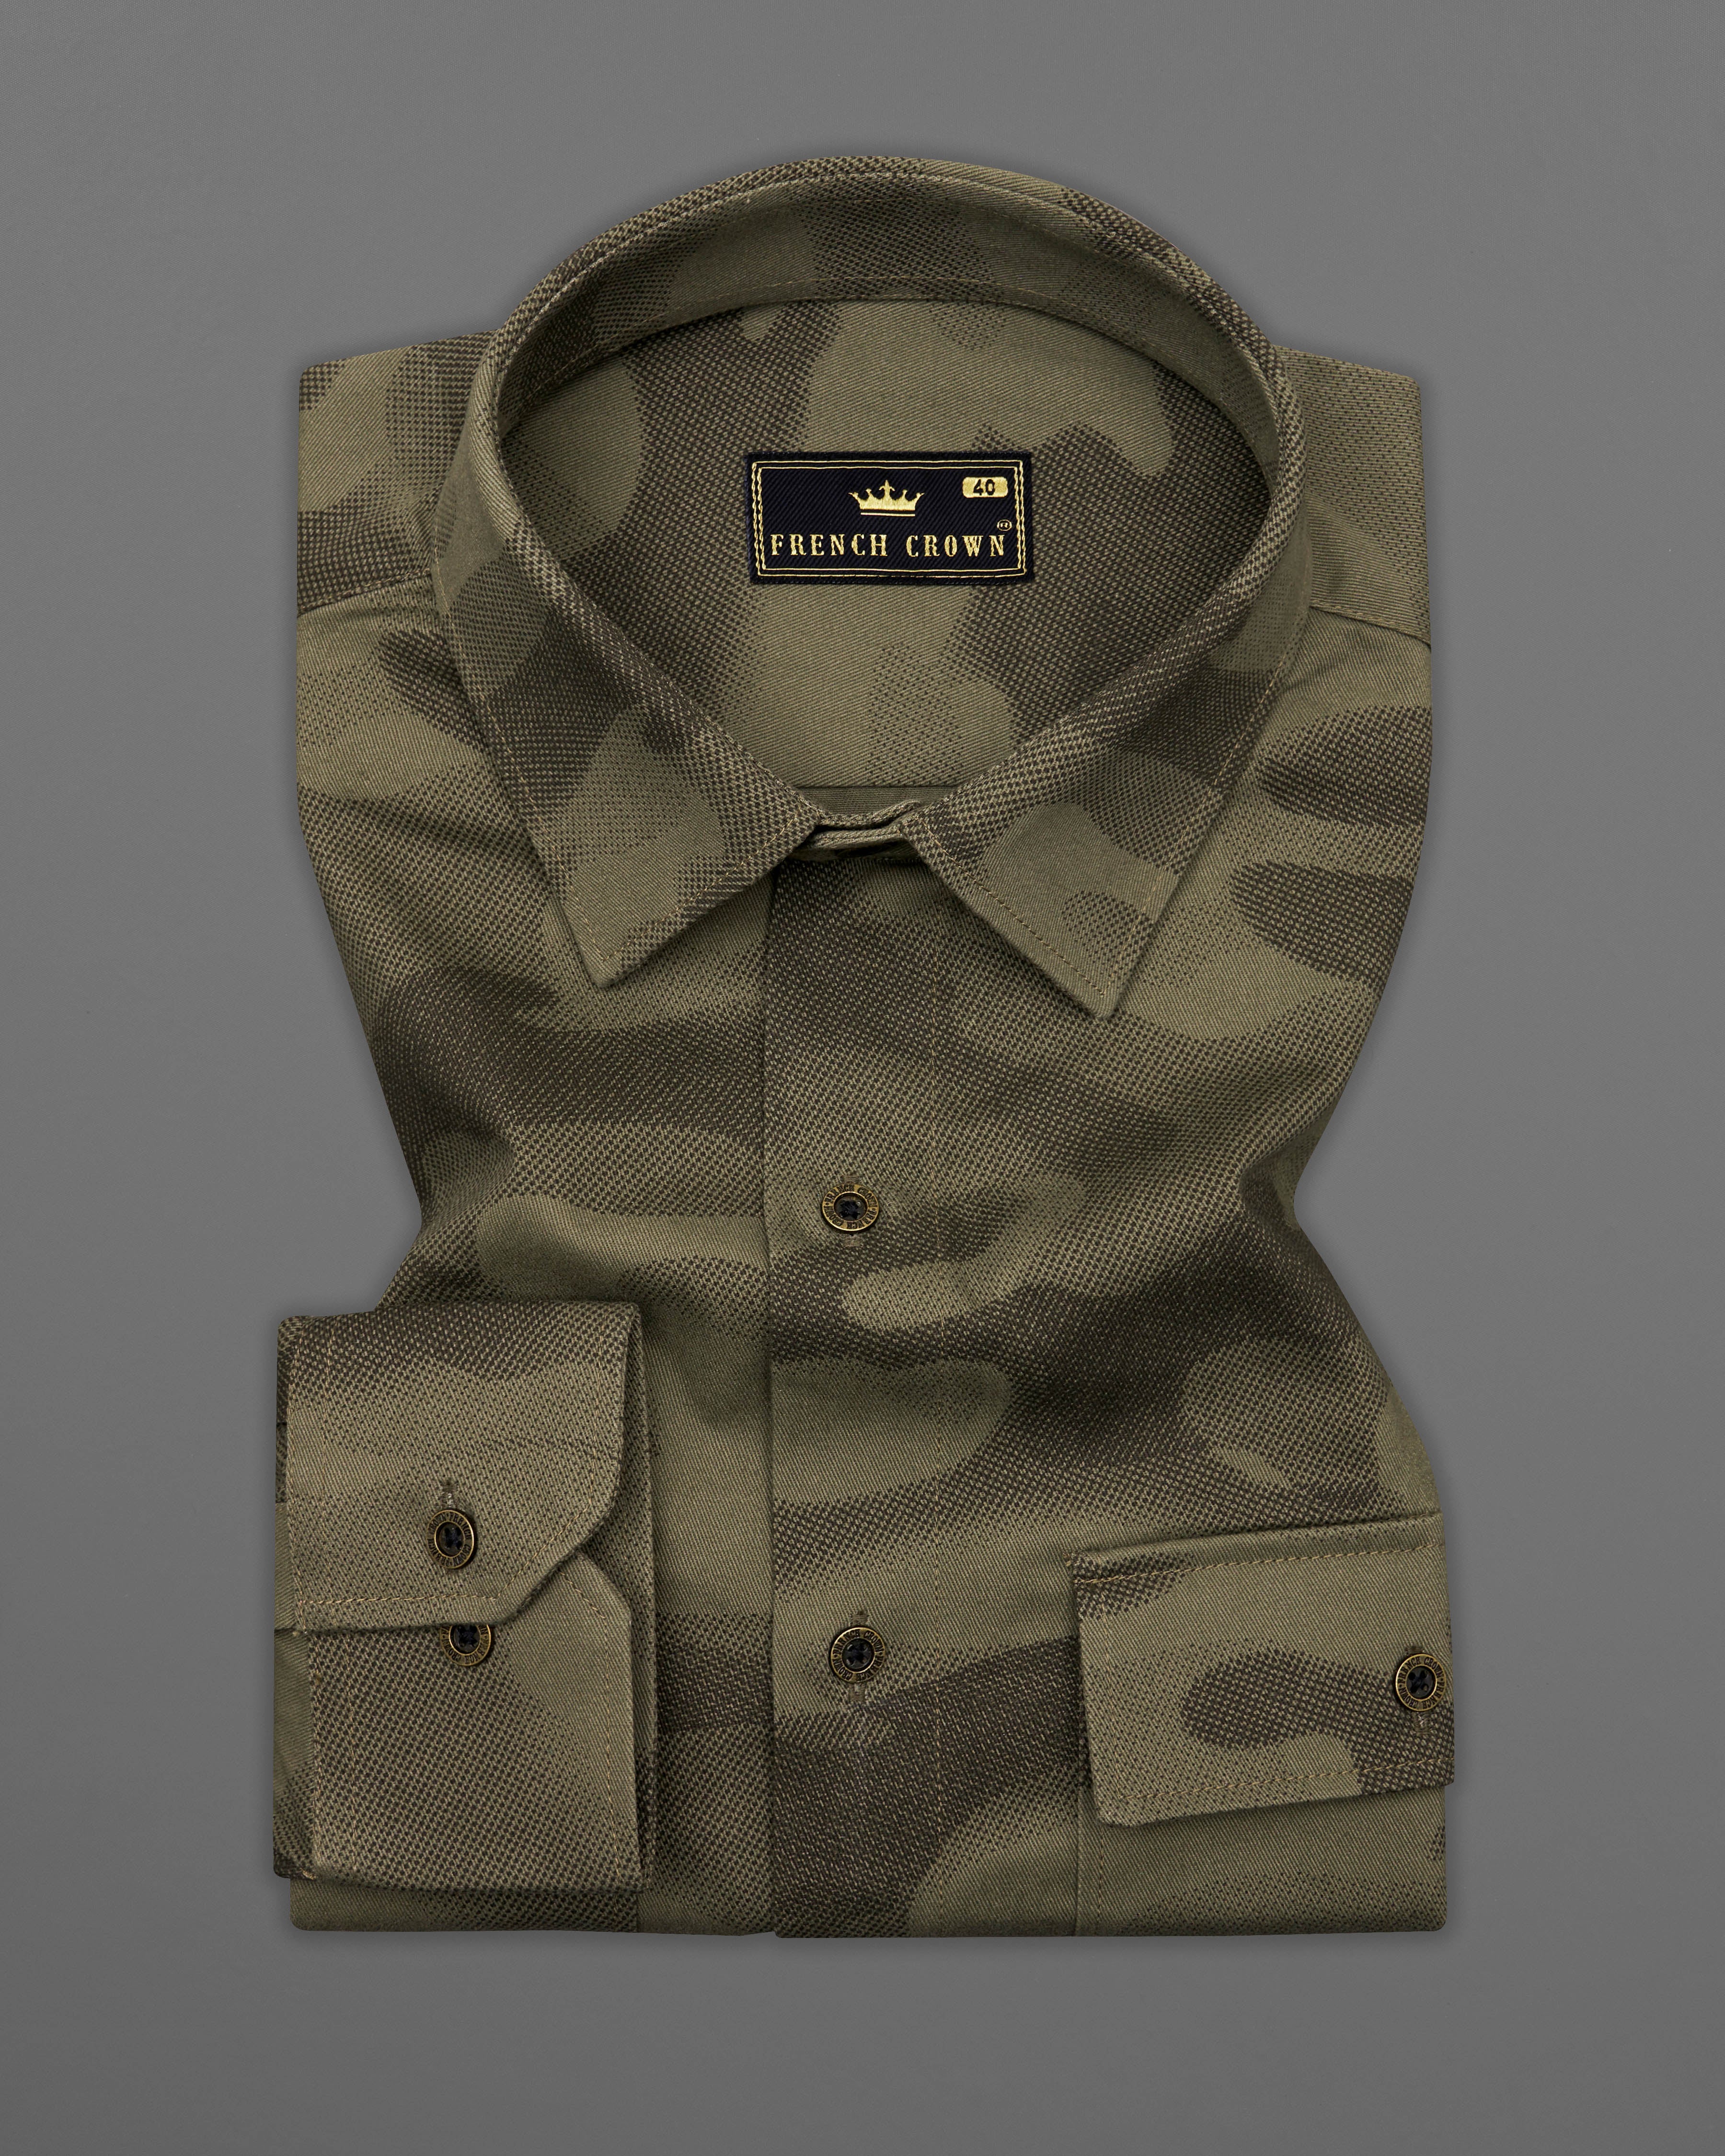 Clay Creek Brown with Iridium Green Camouflage Royal Oxford Overshirt/Shacket